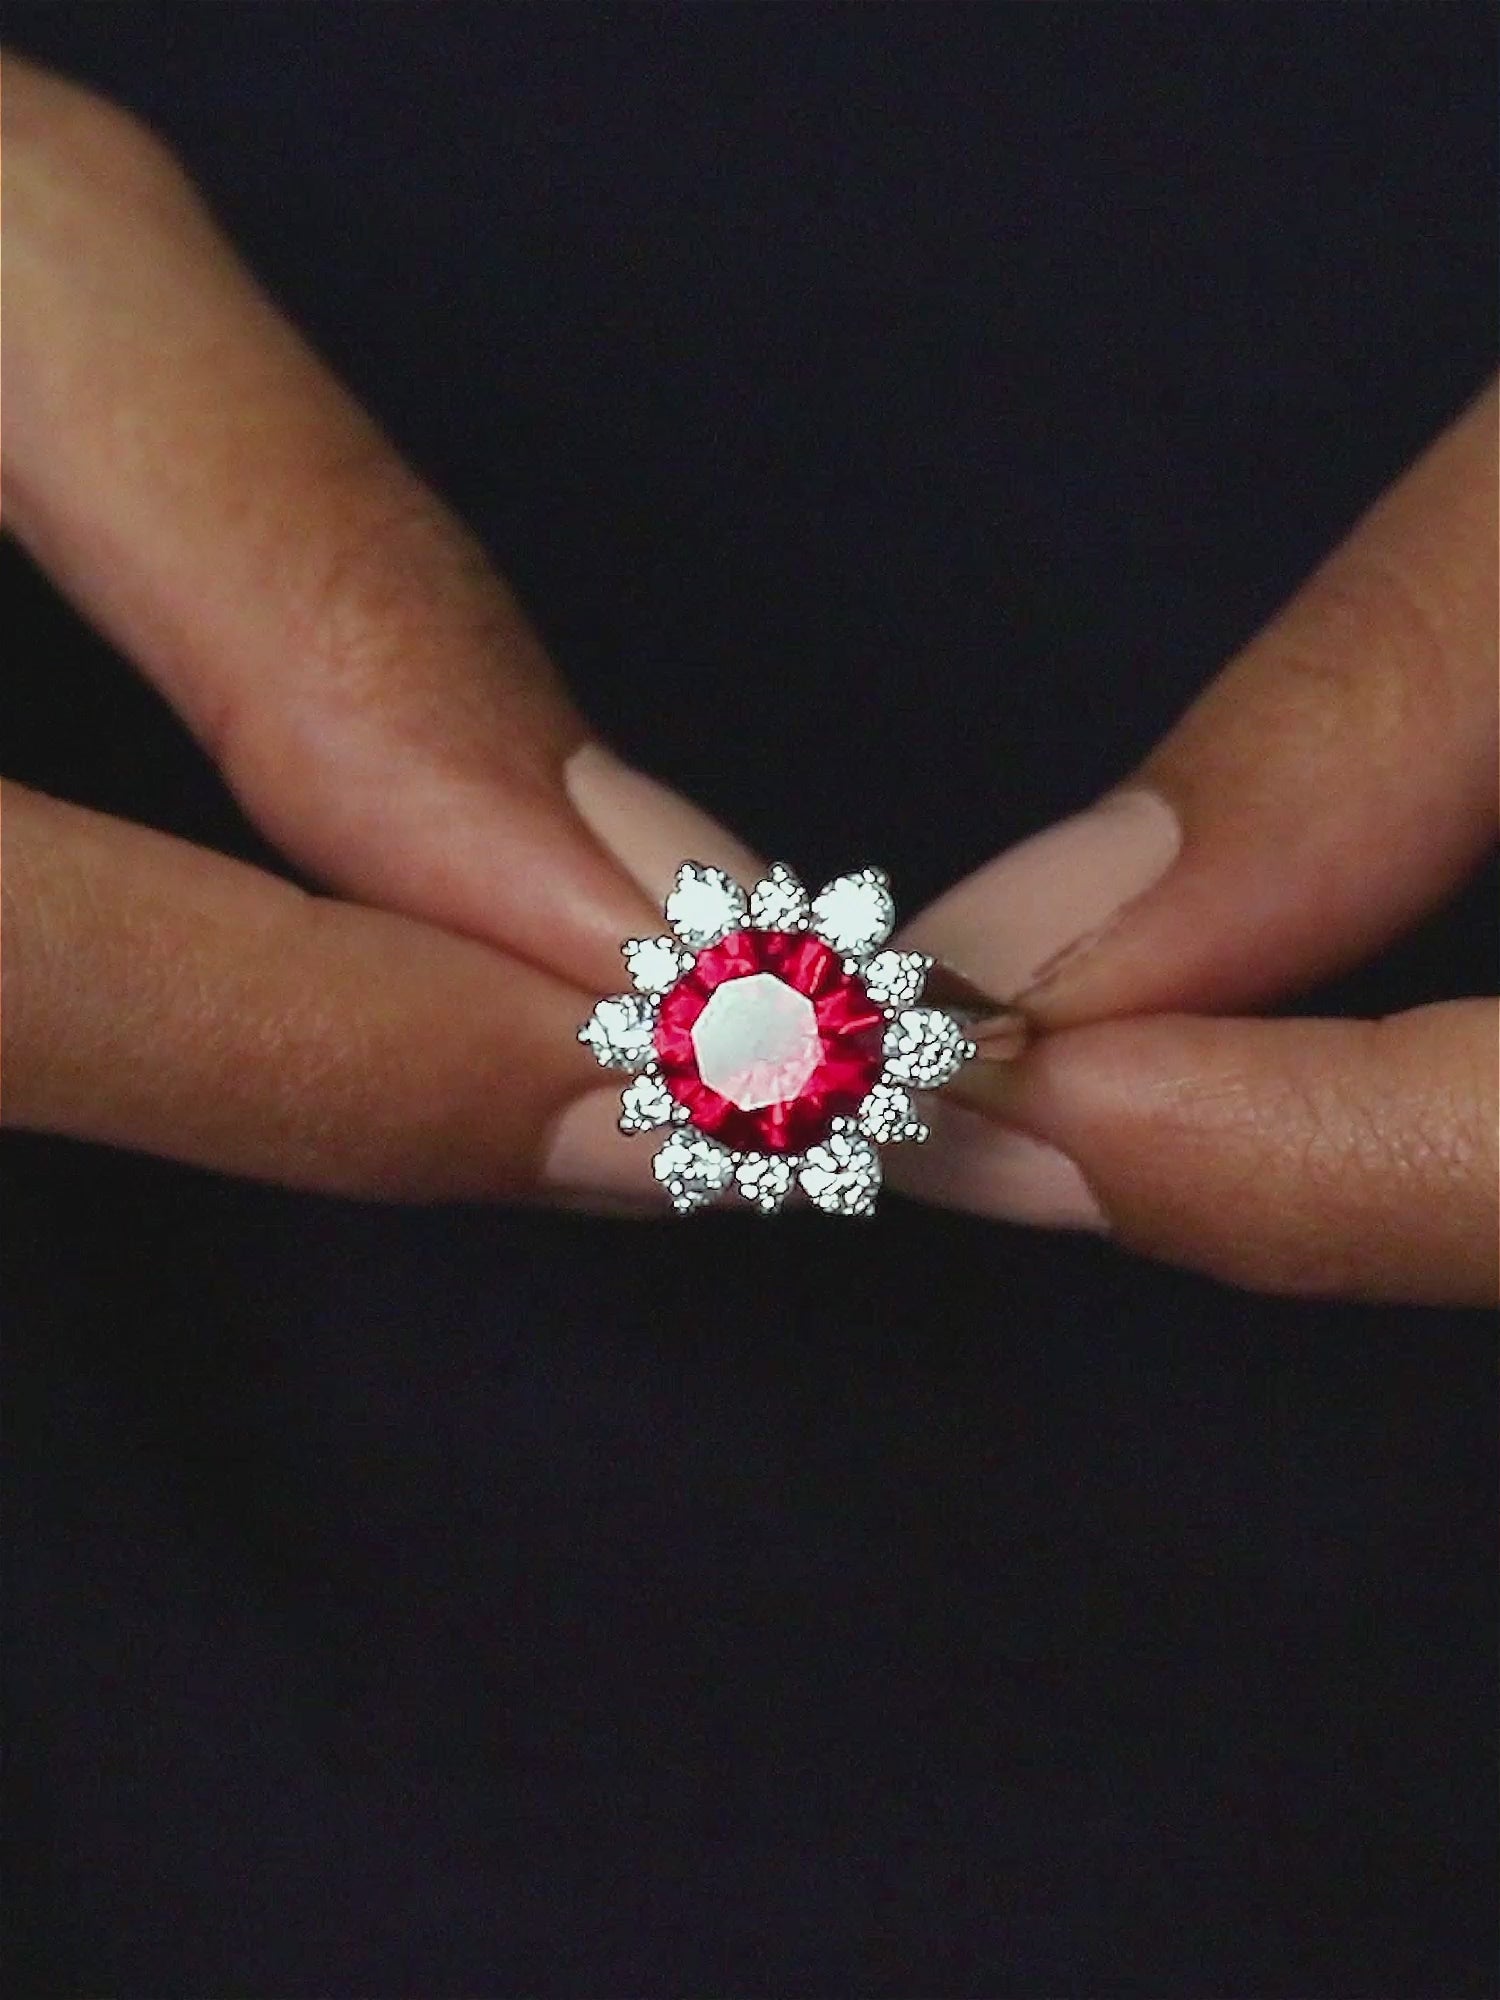 3.5 Carat Ruby Flower Ring In 925 Silver